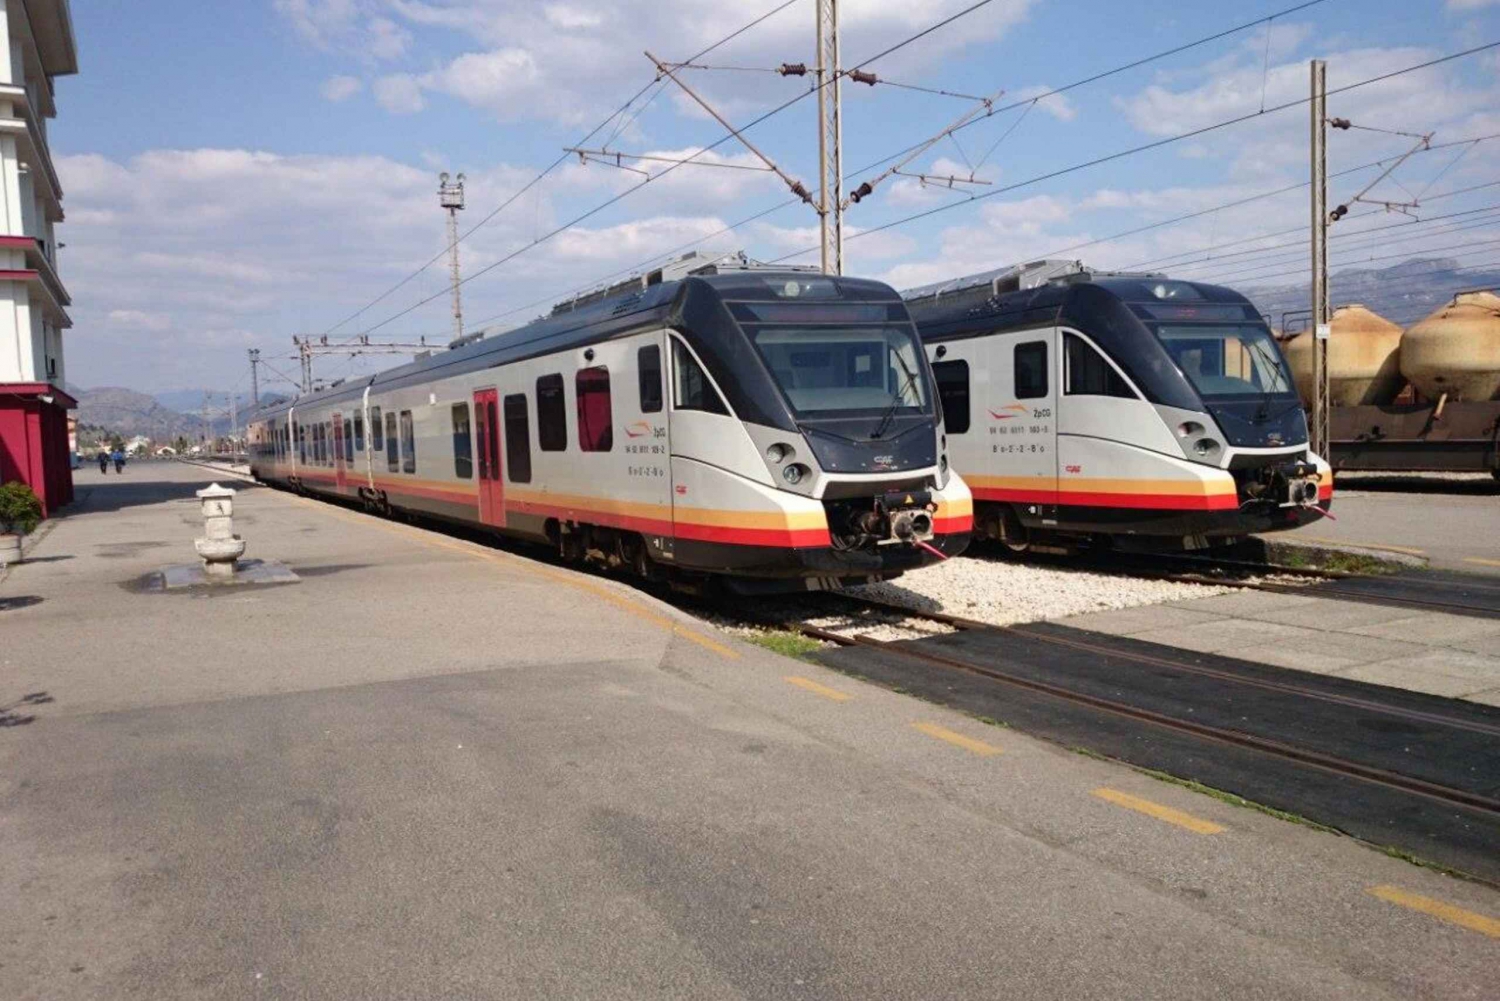 Montenegro Tour by train – Private tour